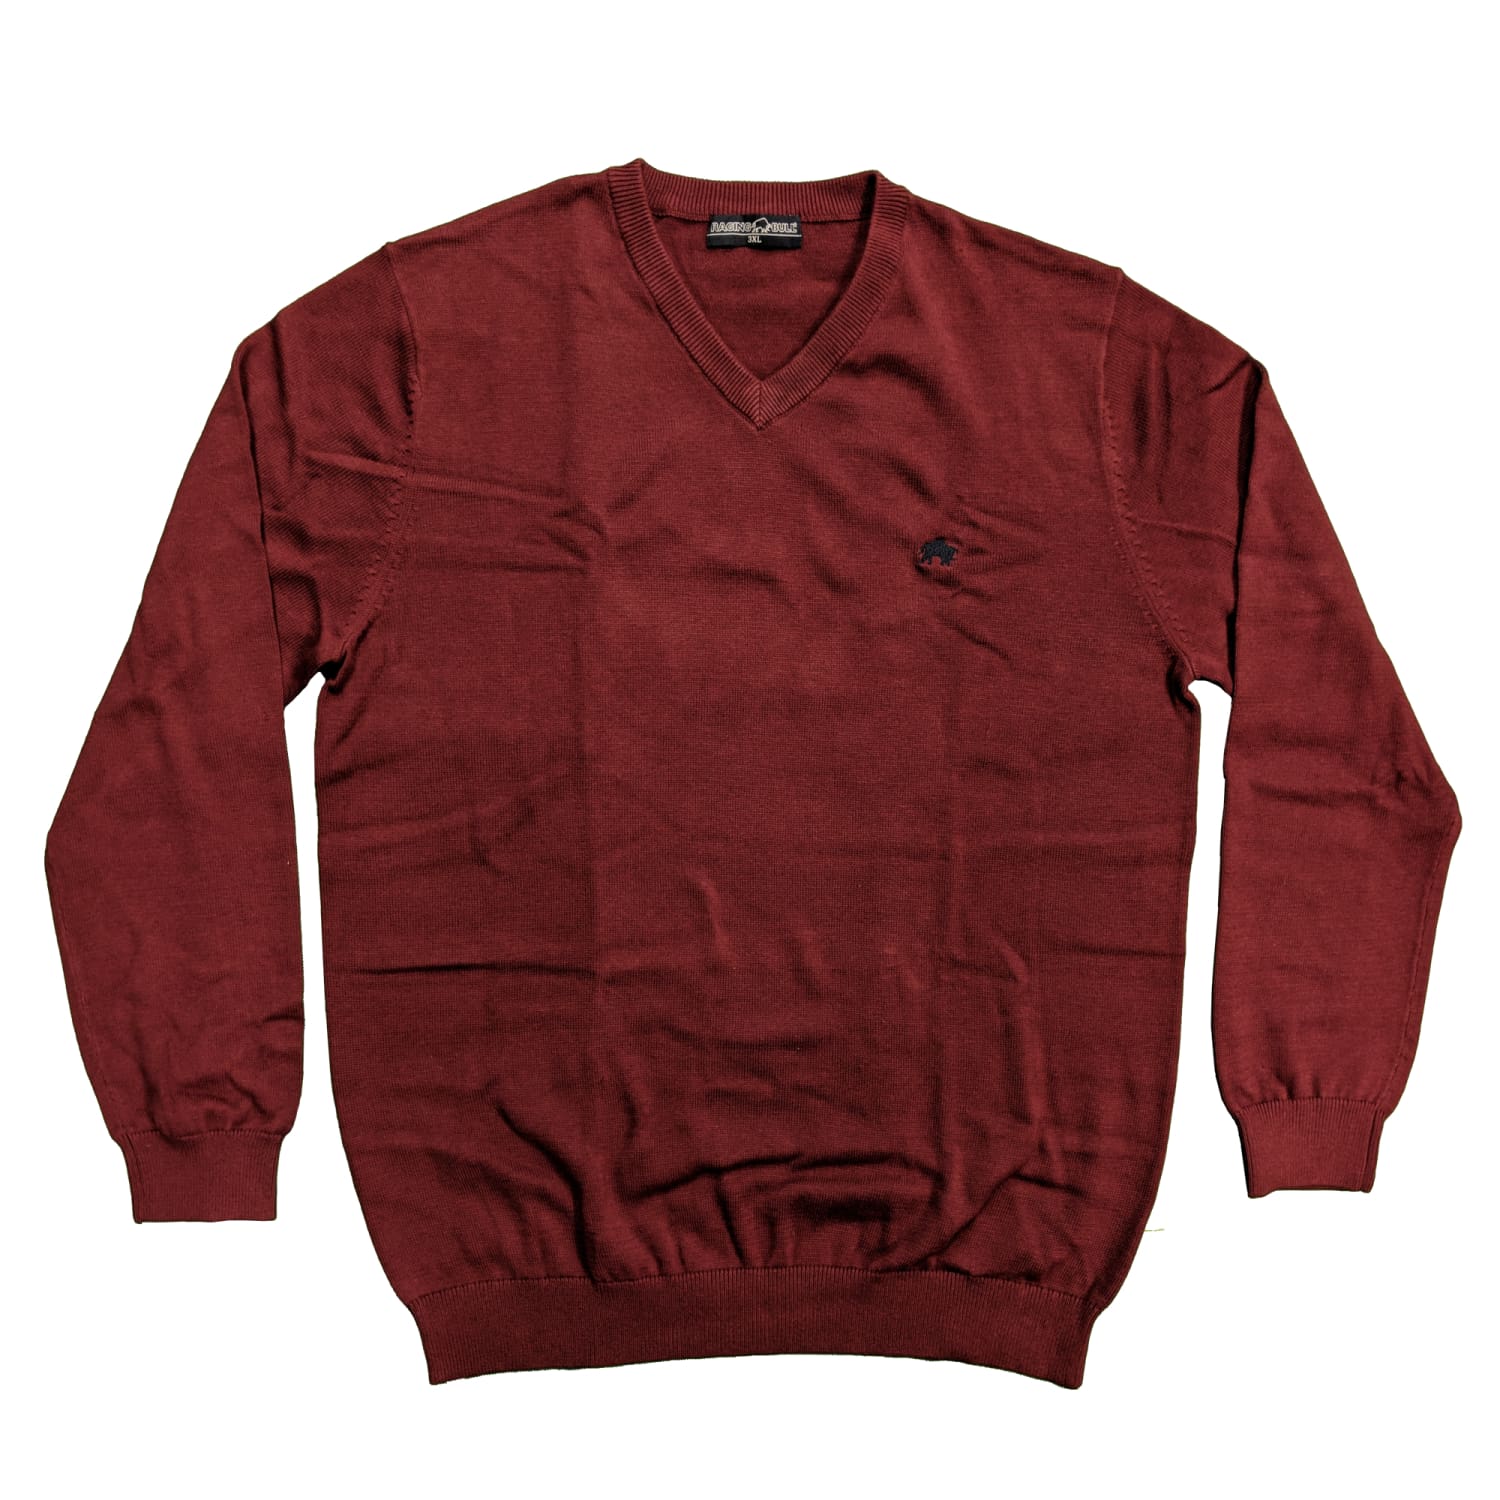 Raging Bull V Neck Cashmere Sweater - RB00503 - Claret 1